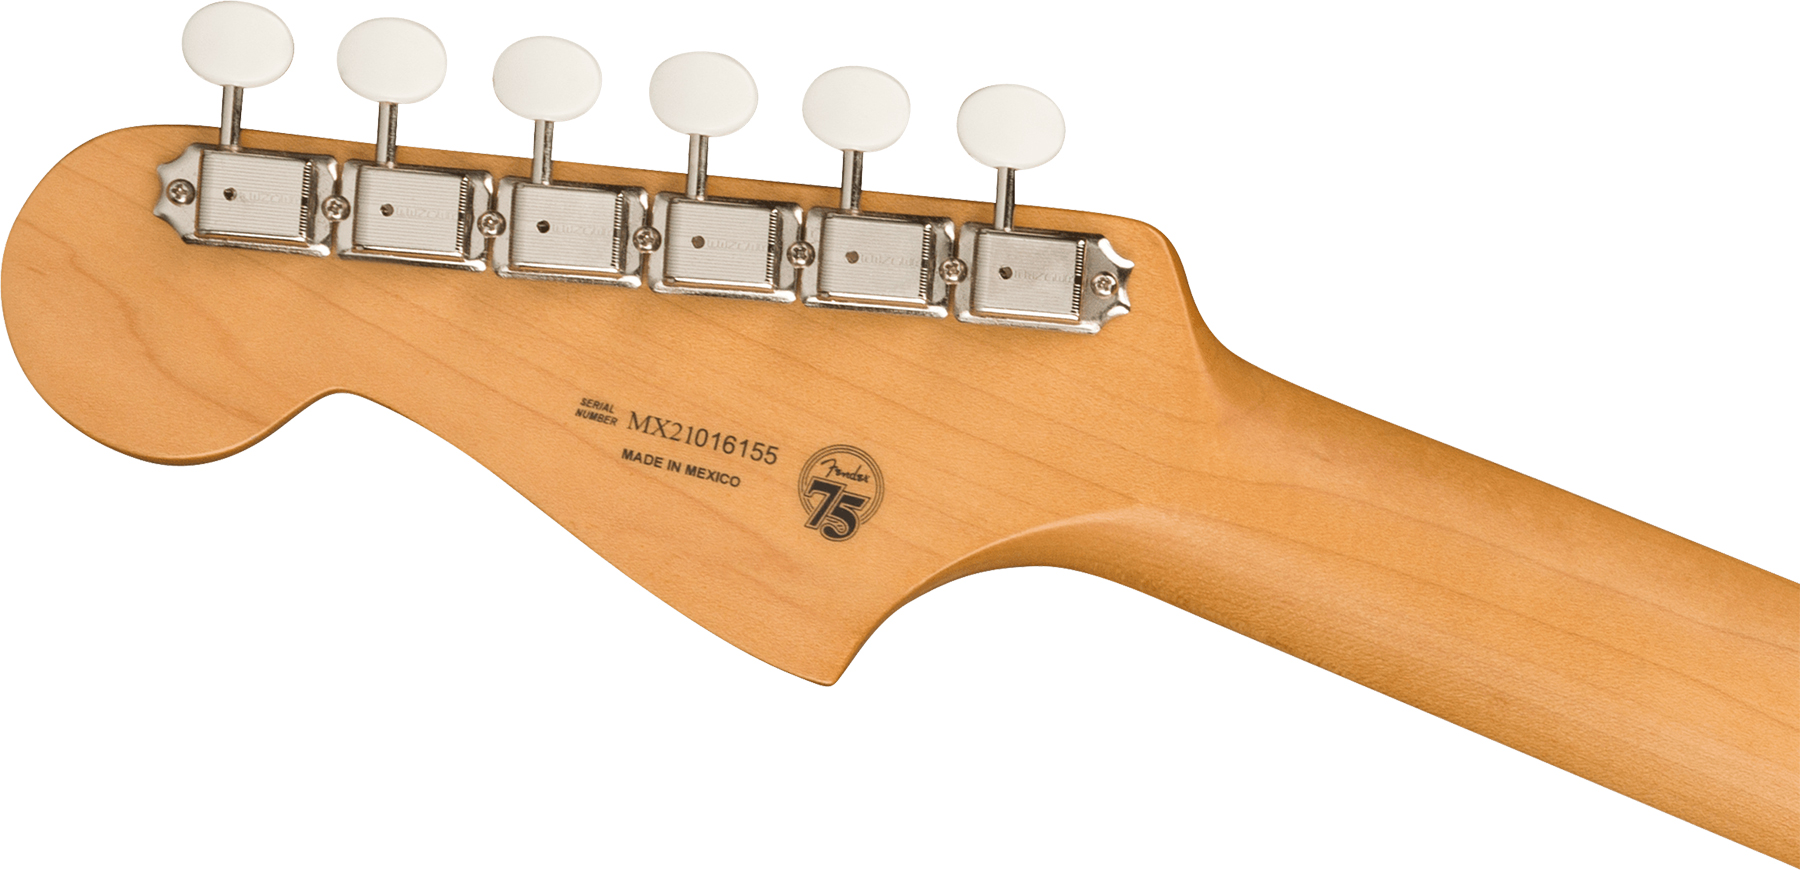 Fender Jazzmaster Gold Foil Ltd Mex 3mh Trem Bigsby Eb - Shoreline Gold - Retro rock electric guitar - Variation 3